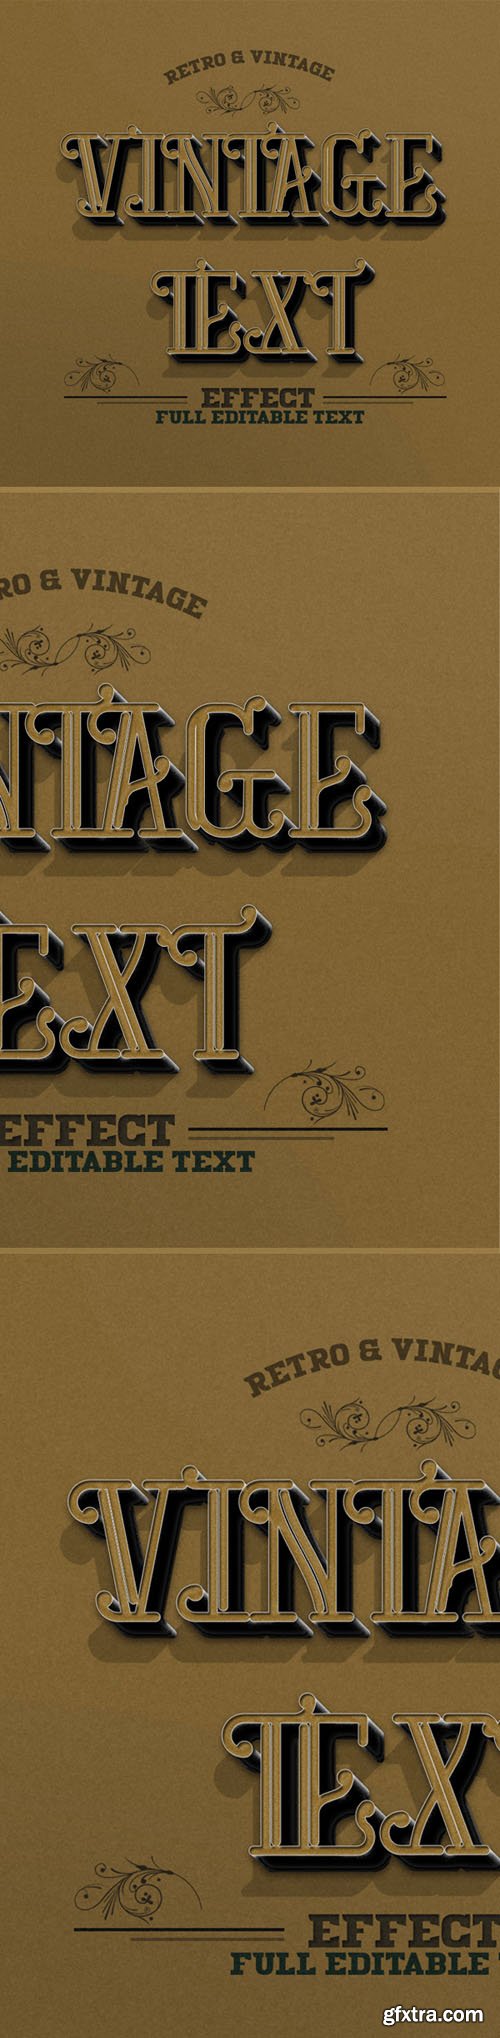 Retro & Vintage Photoshop Text Effect v2